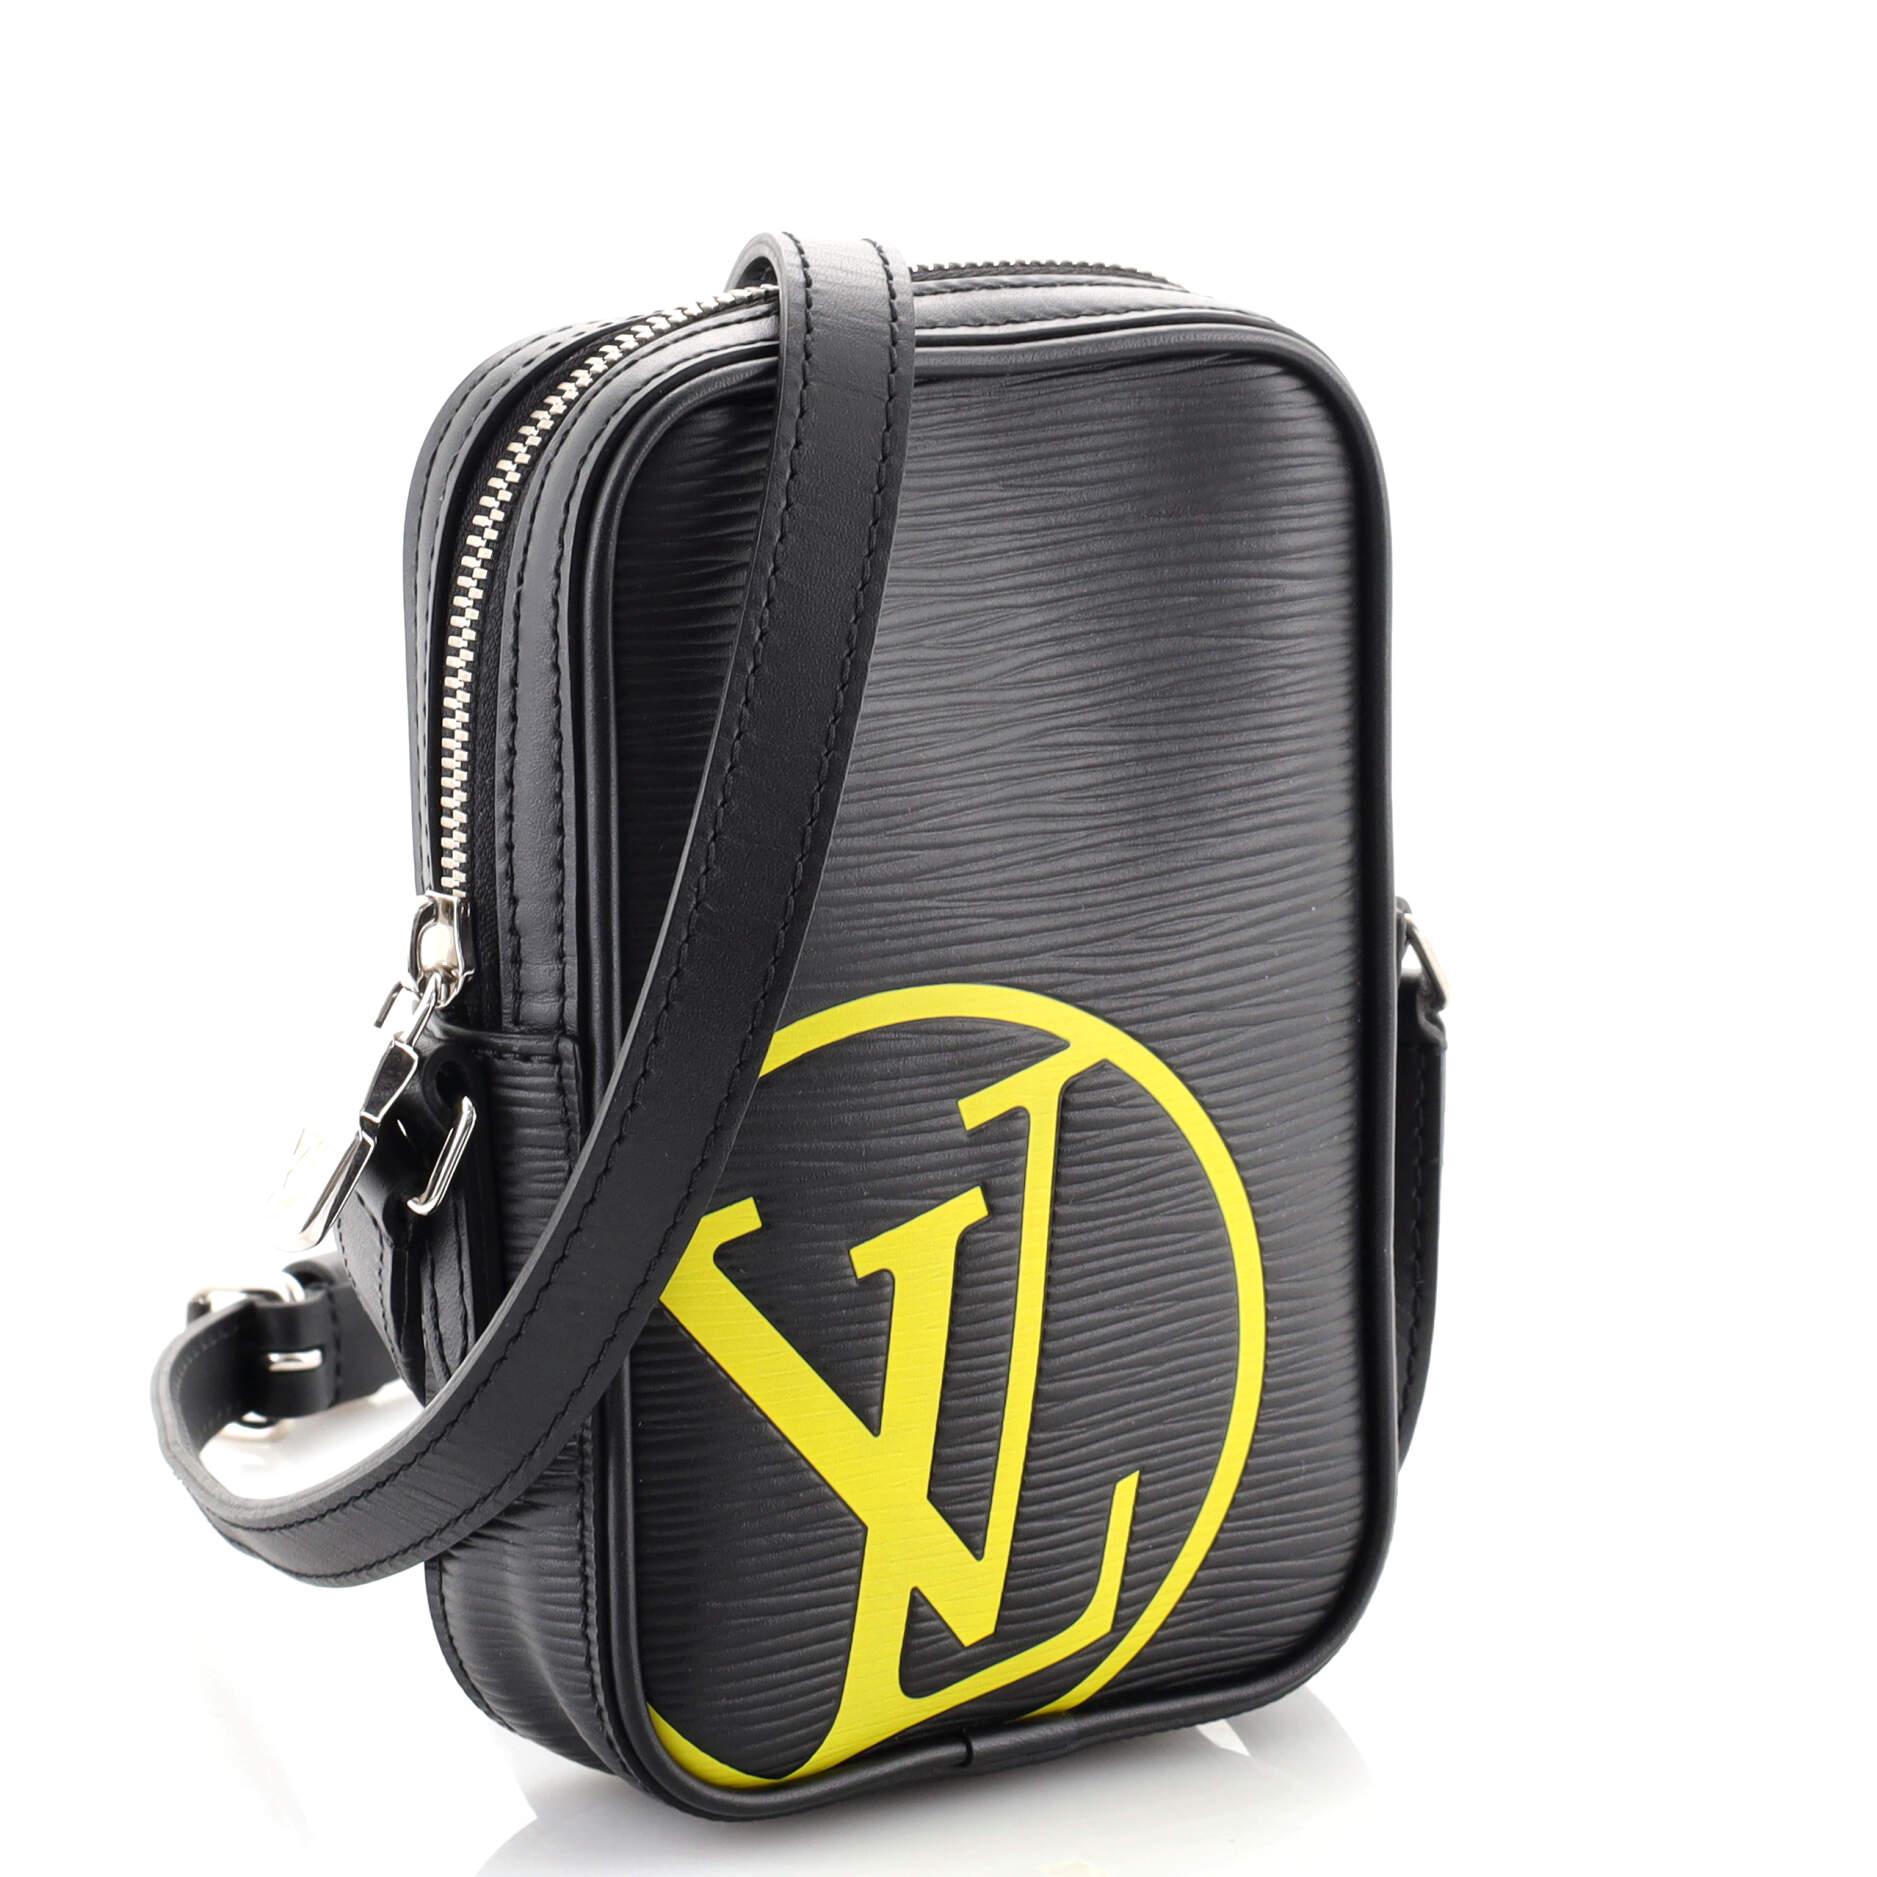 handbag with initials